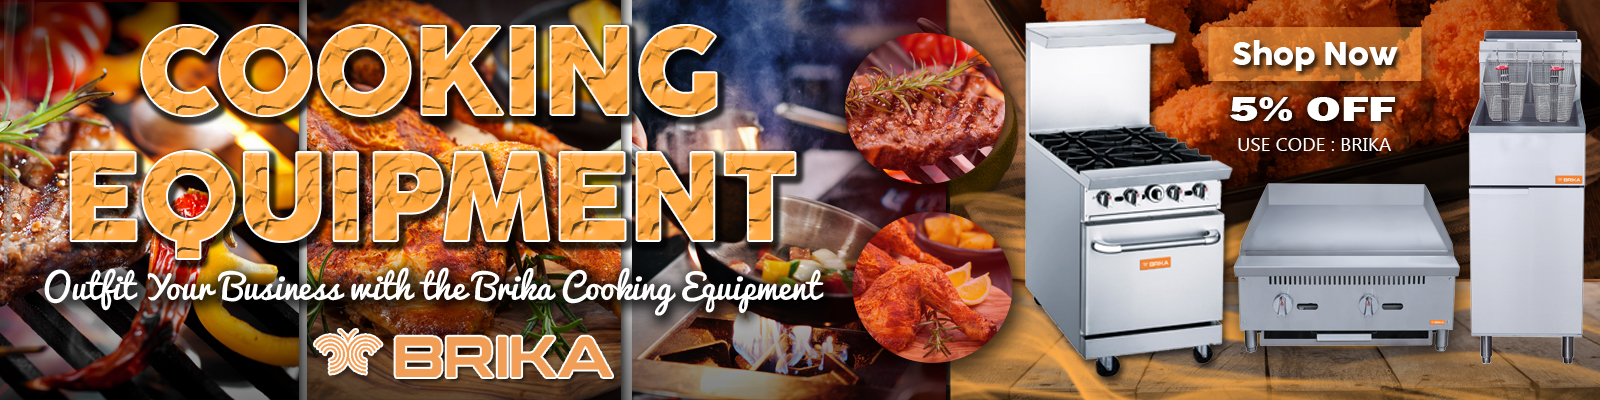 Brika Cooking Equipment, Brika Griddle, Star Charbroiler, Brika Hot Plate, Brika Fryer Vancouver